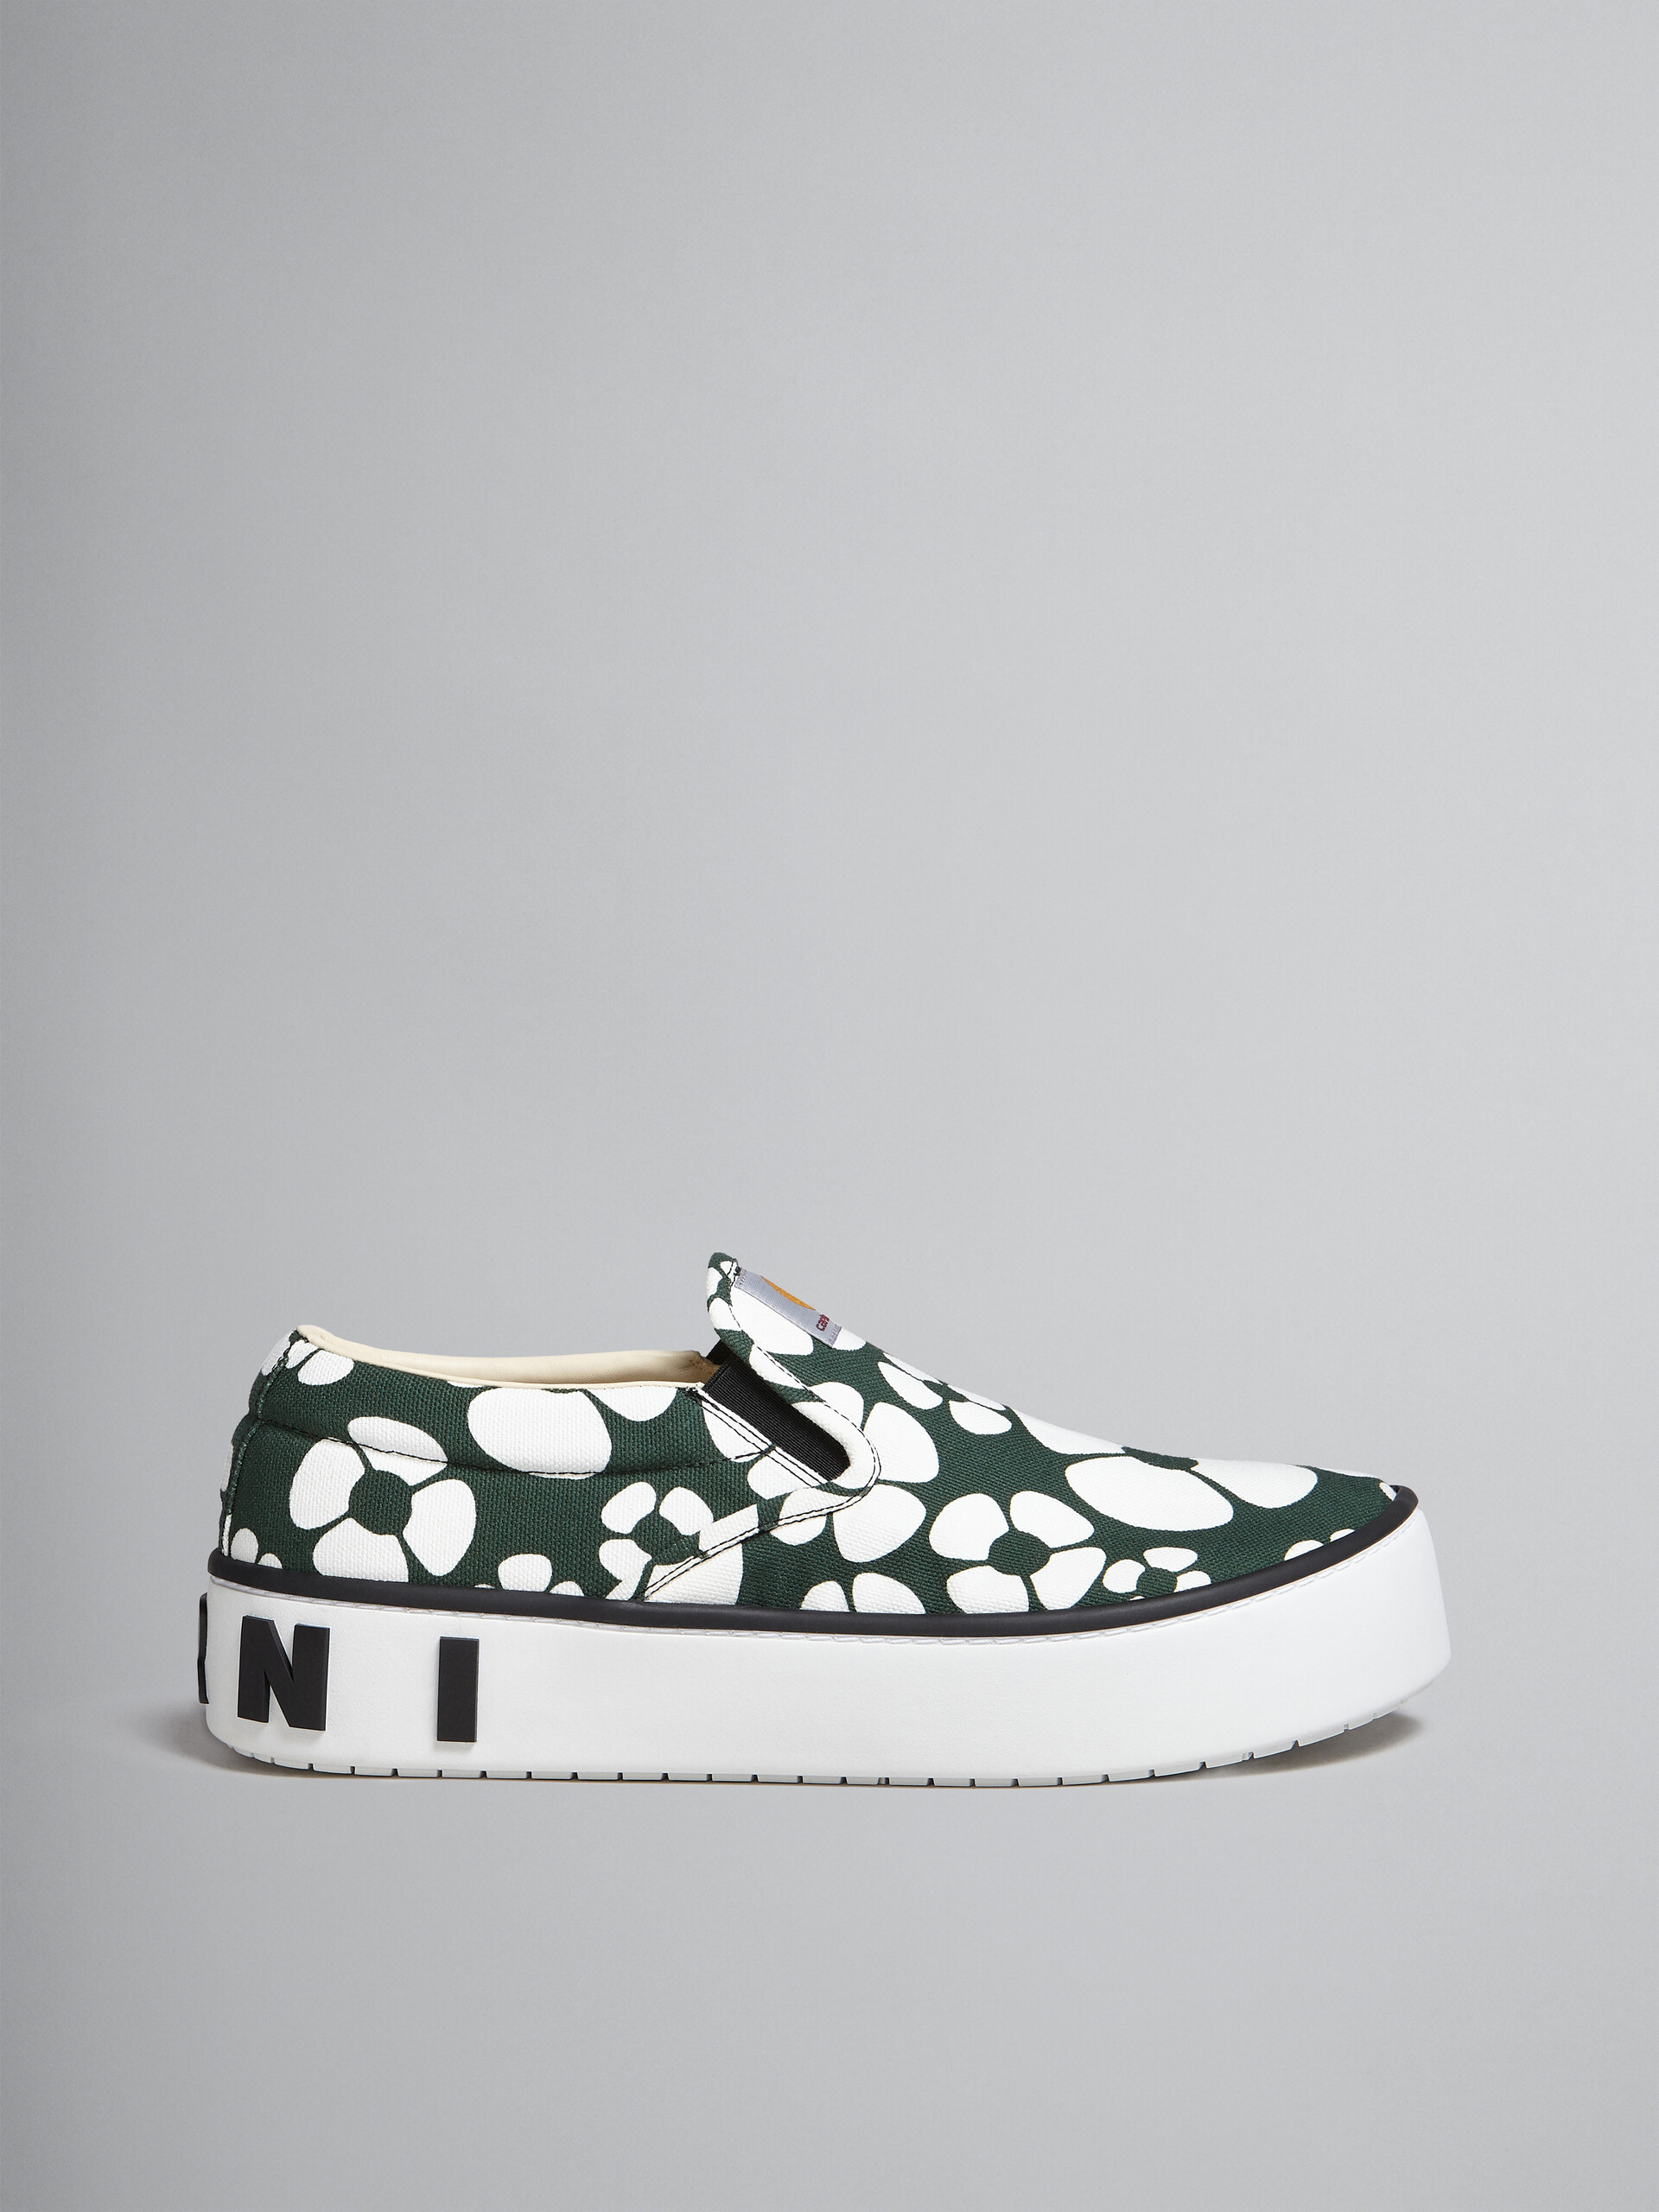 MARNI x CARHARTT WIP - grüne Slip-on-Sneakers - Sneakers - Image 1